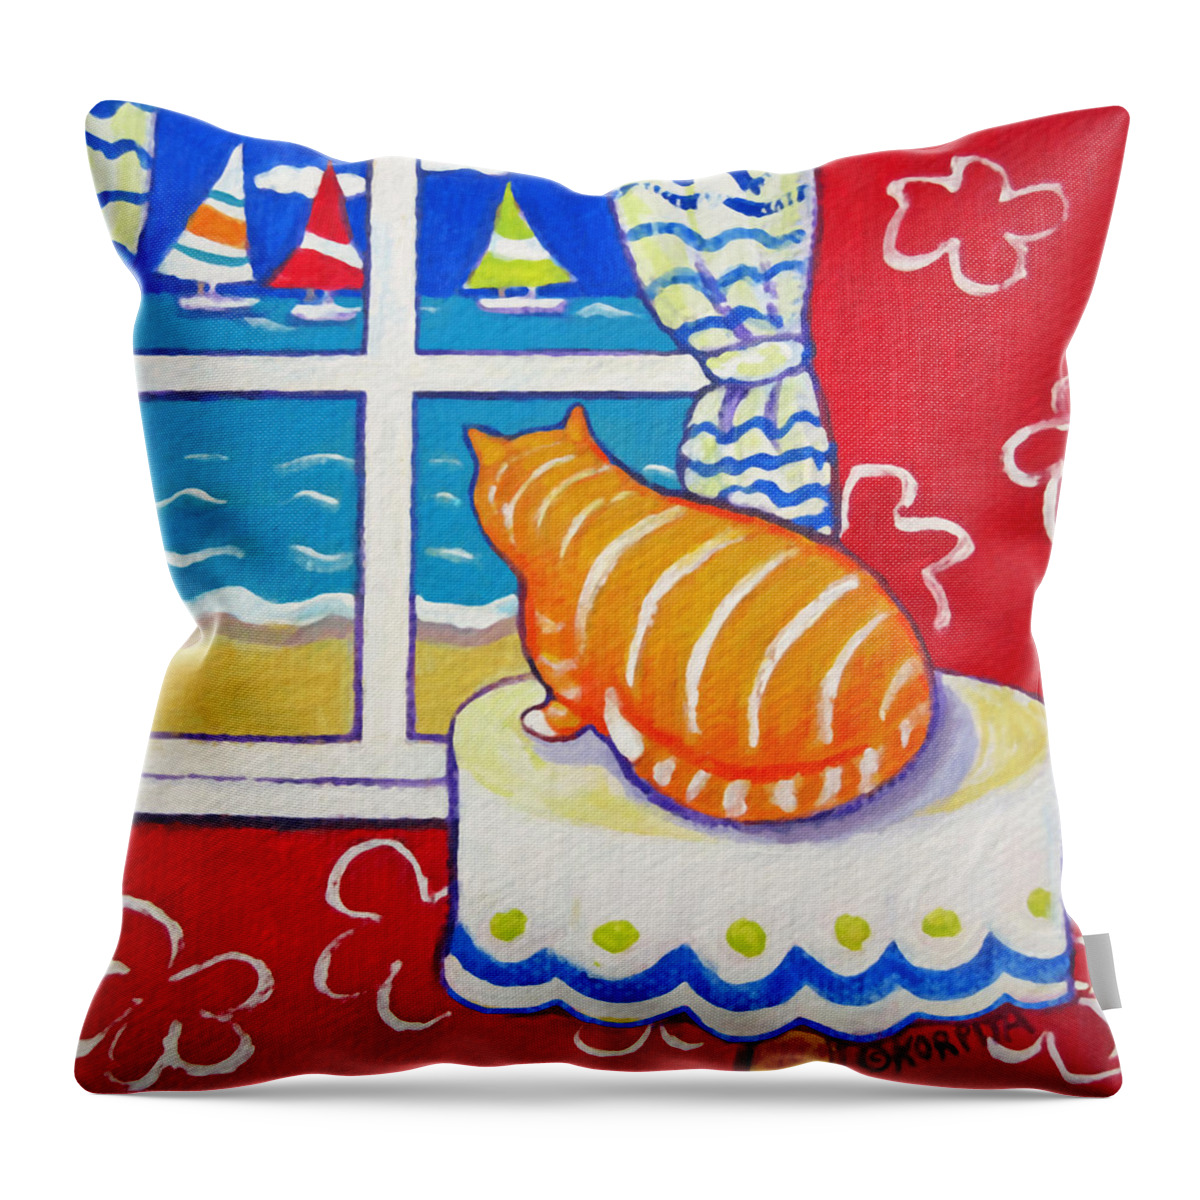 Fat Orange Tabby Cat Throw Pillow featuring the painting Fat Orange Tabby Cat Window Seashore Sailboats by Rebecca Korpita